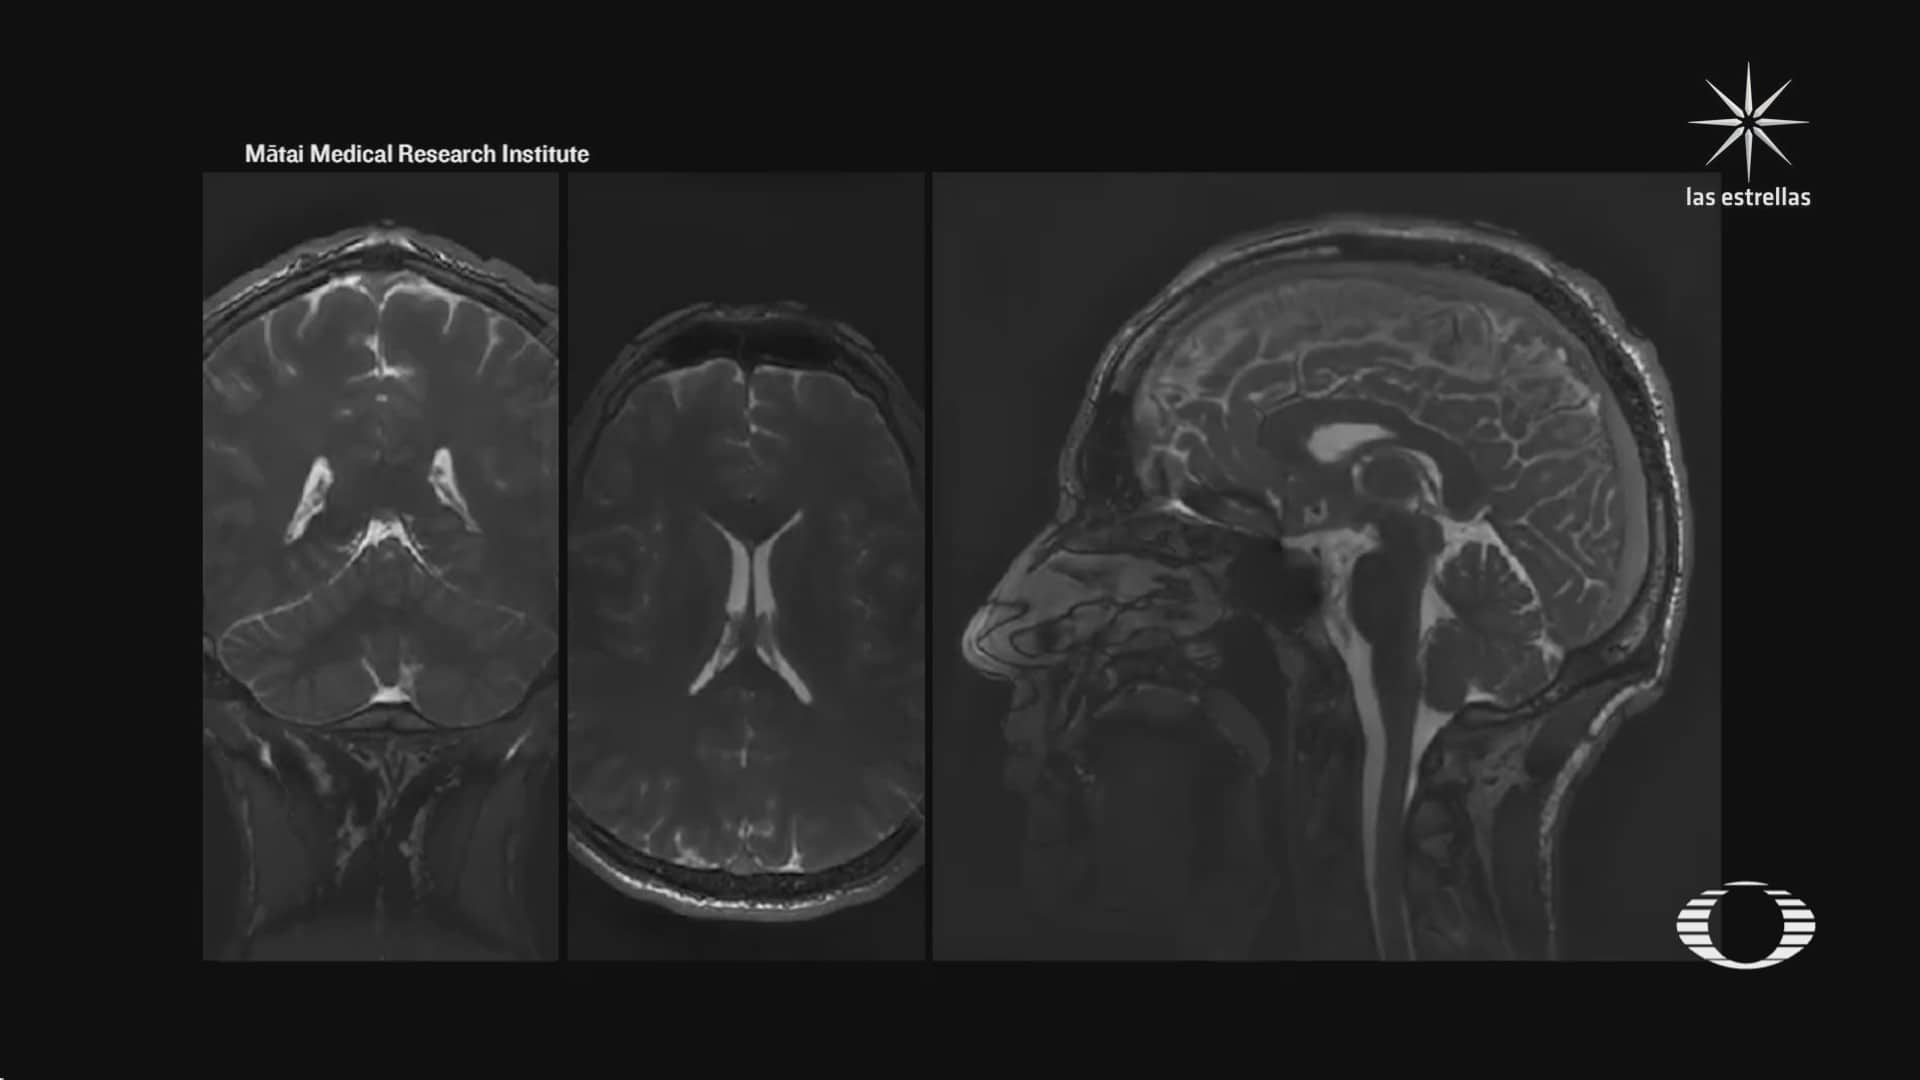 desarrollan resonancia magnetica cerebral en 3d capaz de detectar aneurismas